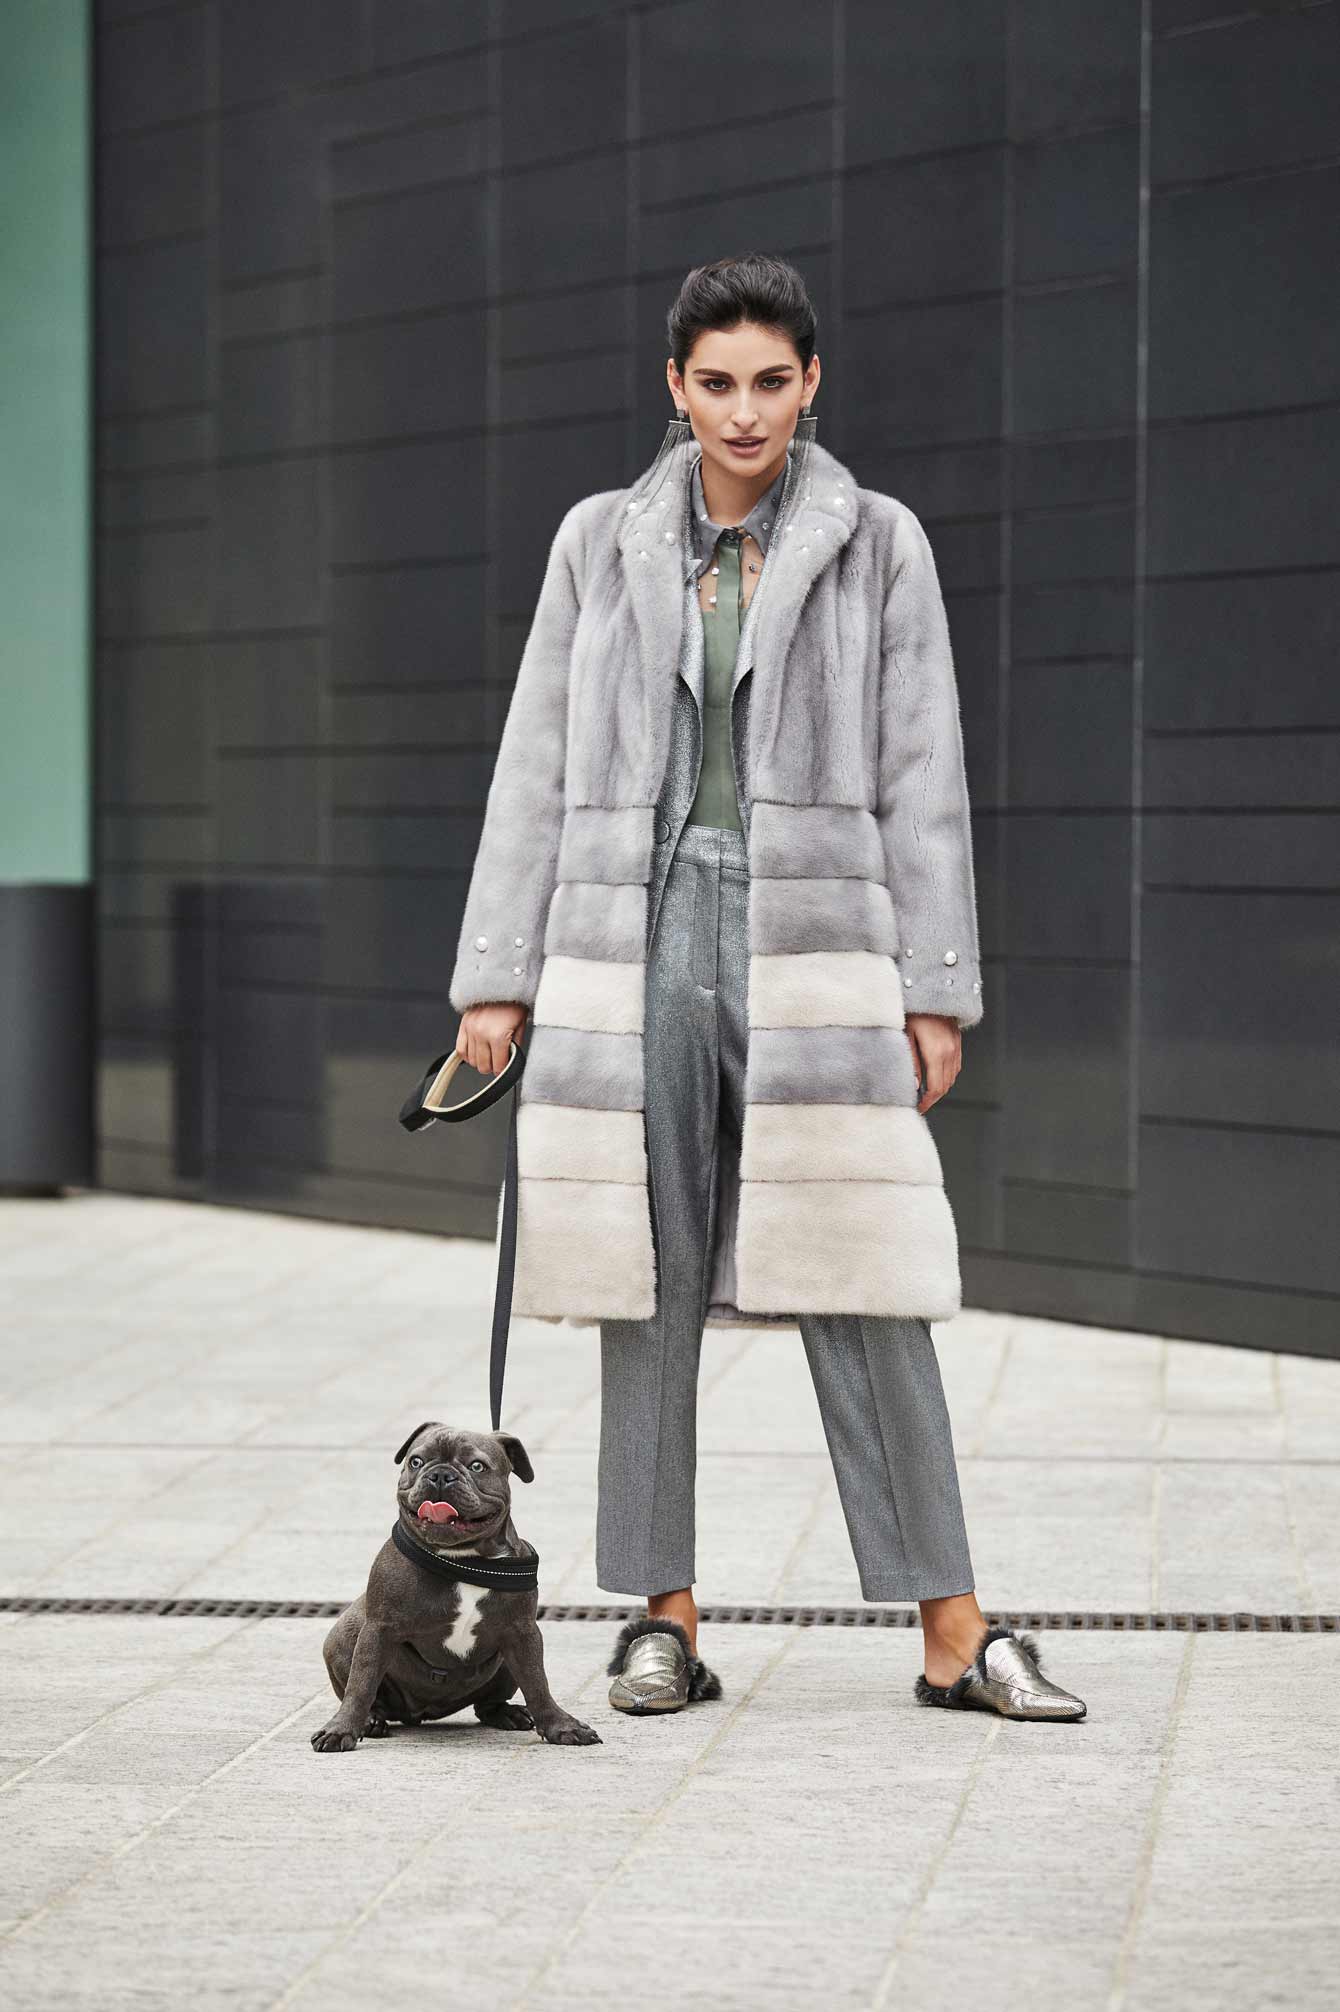 Italian mink coat. Paolo Moretti fur coats in Milan.